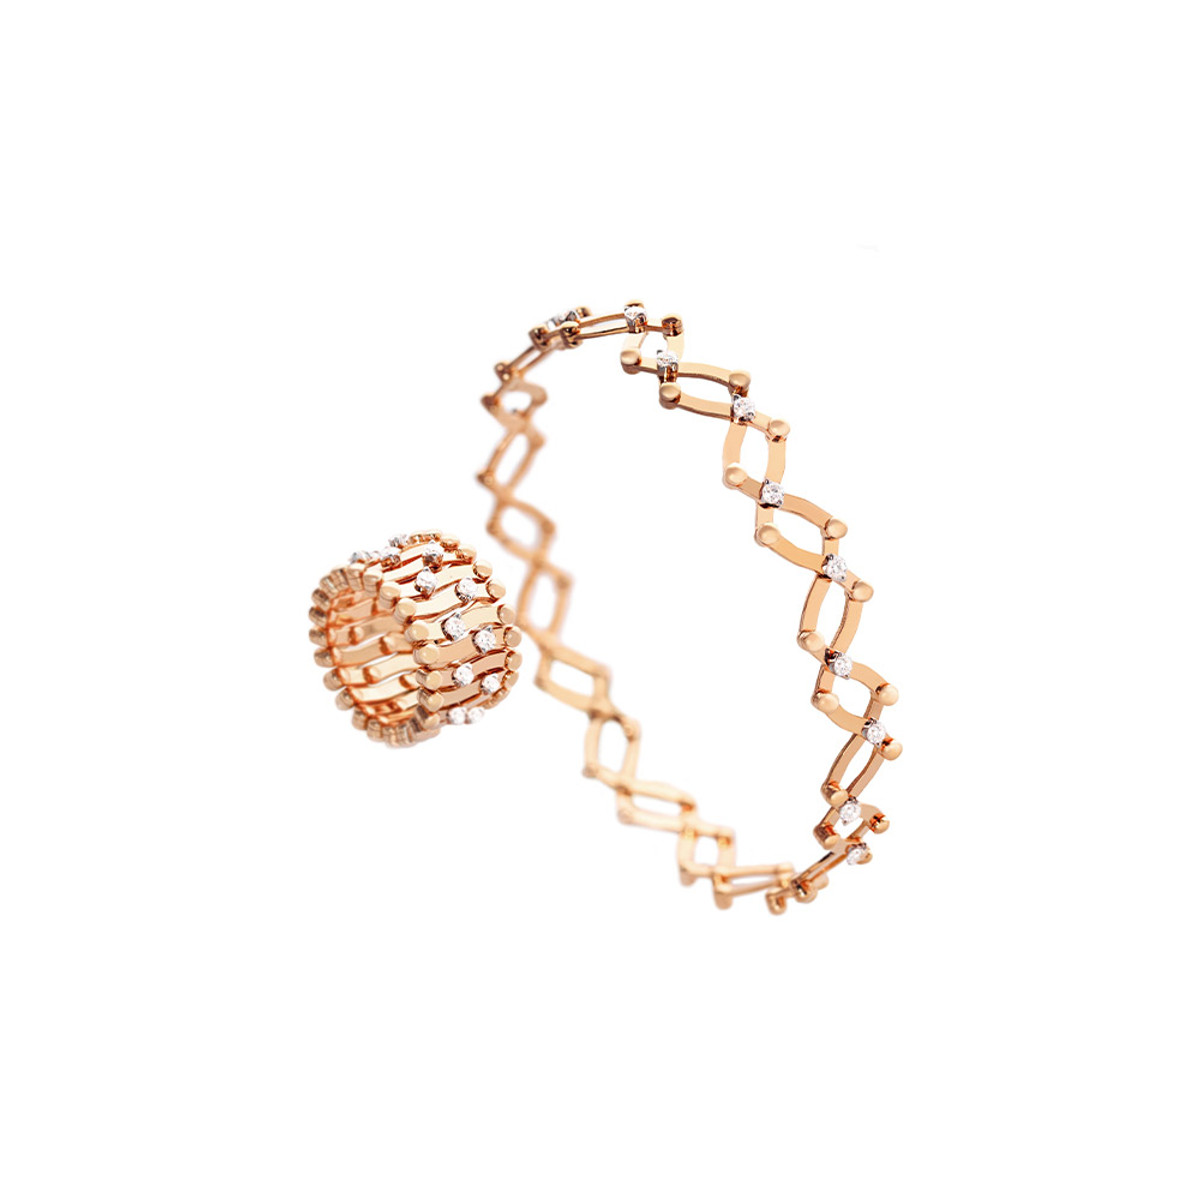 Serafino Consoli 18K Rose Gold Diamond Ring Bracelet-56551 Product Image